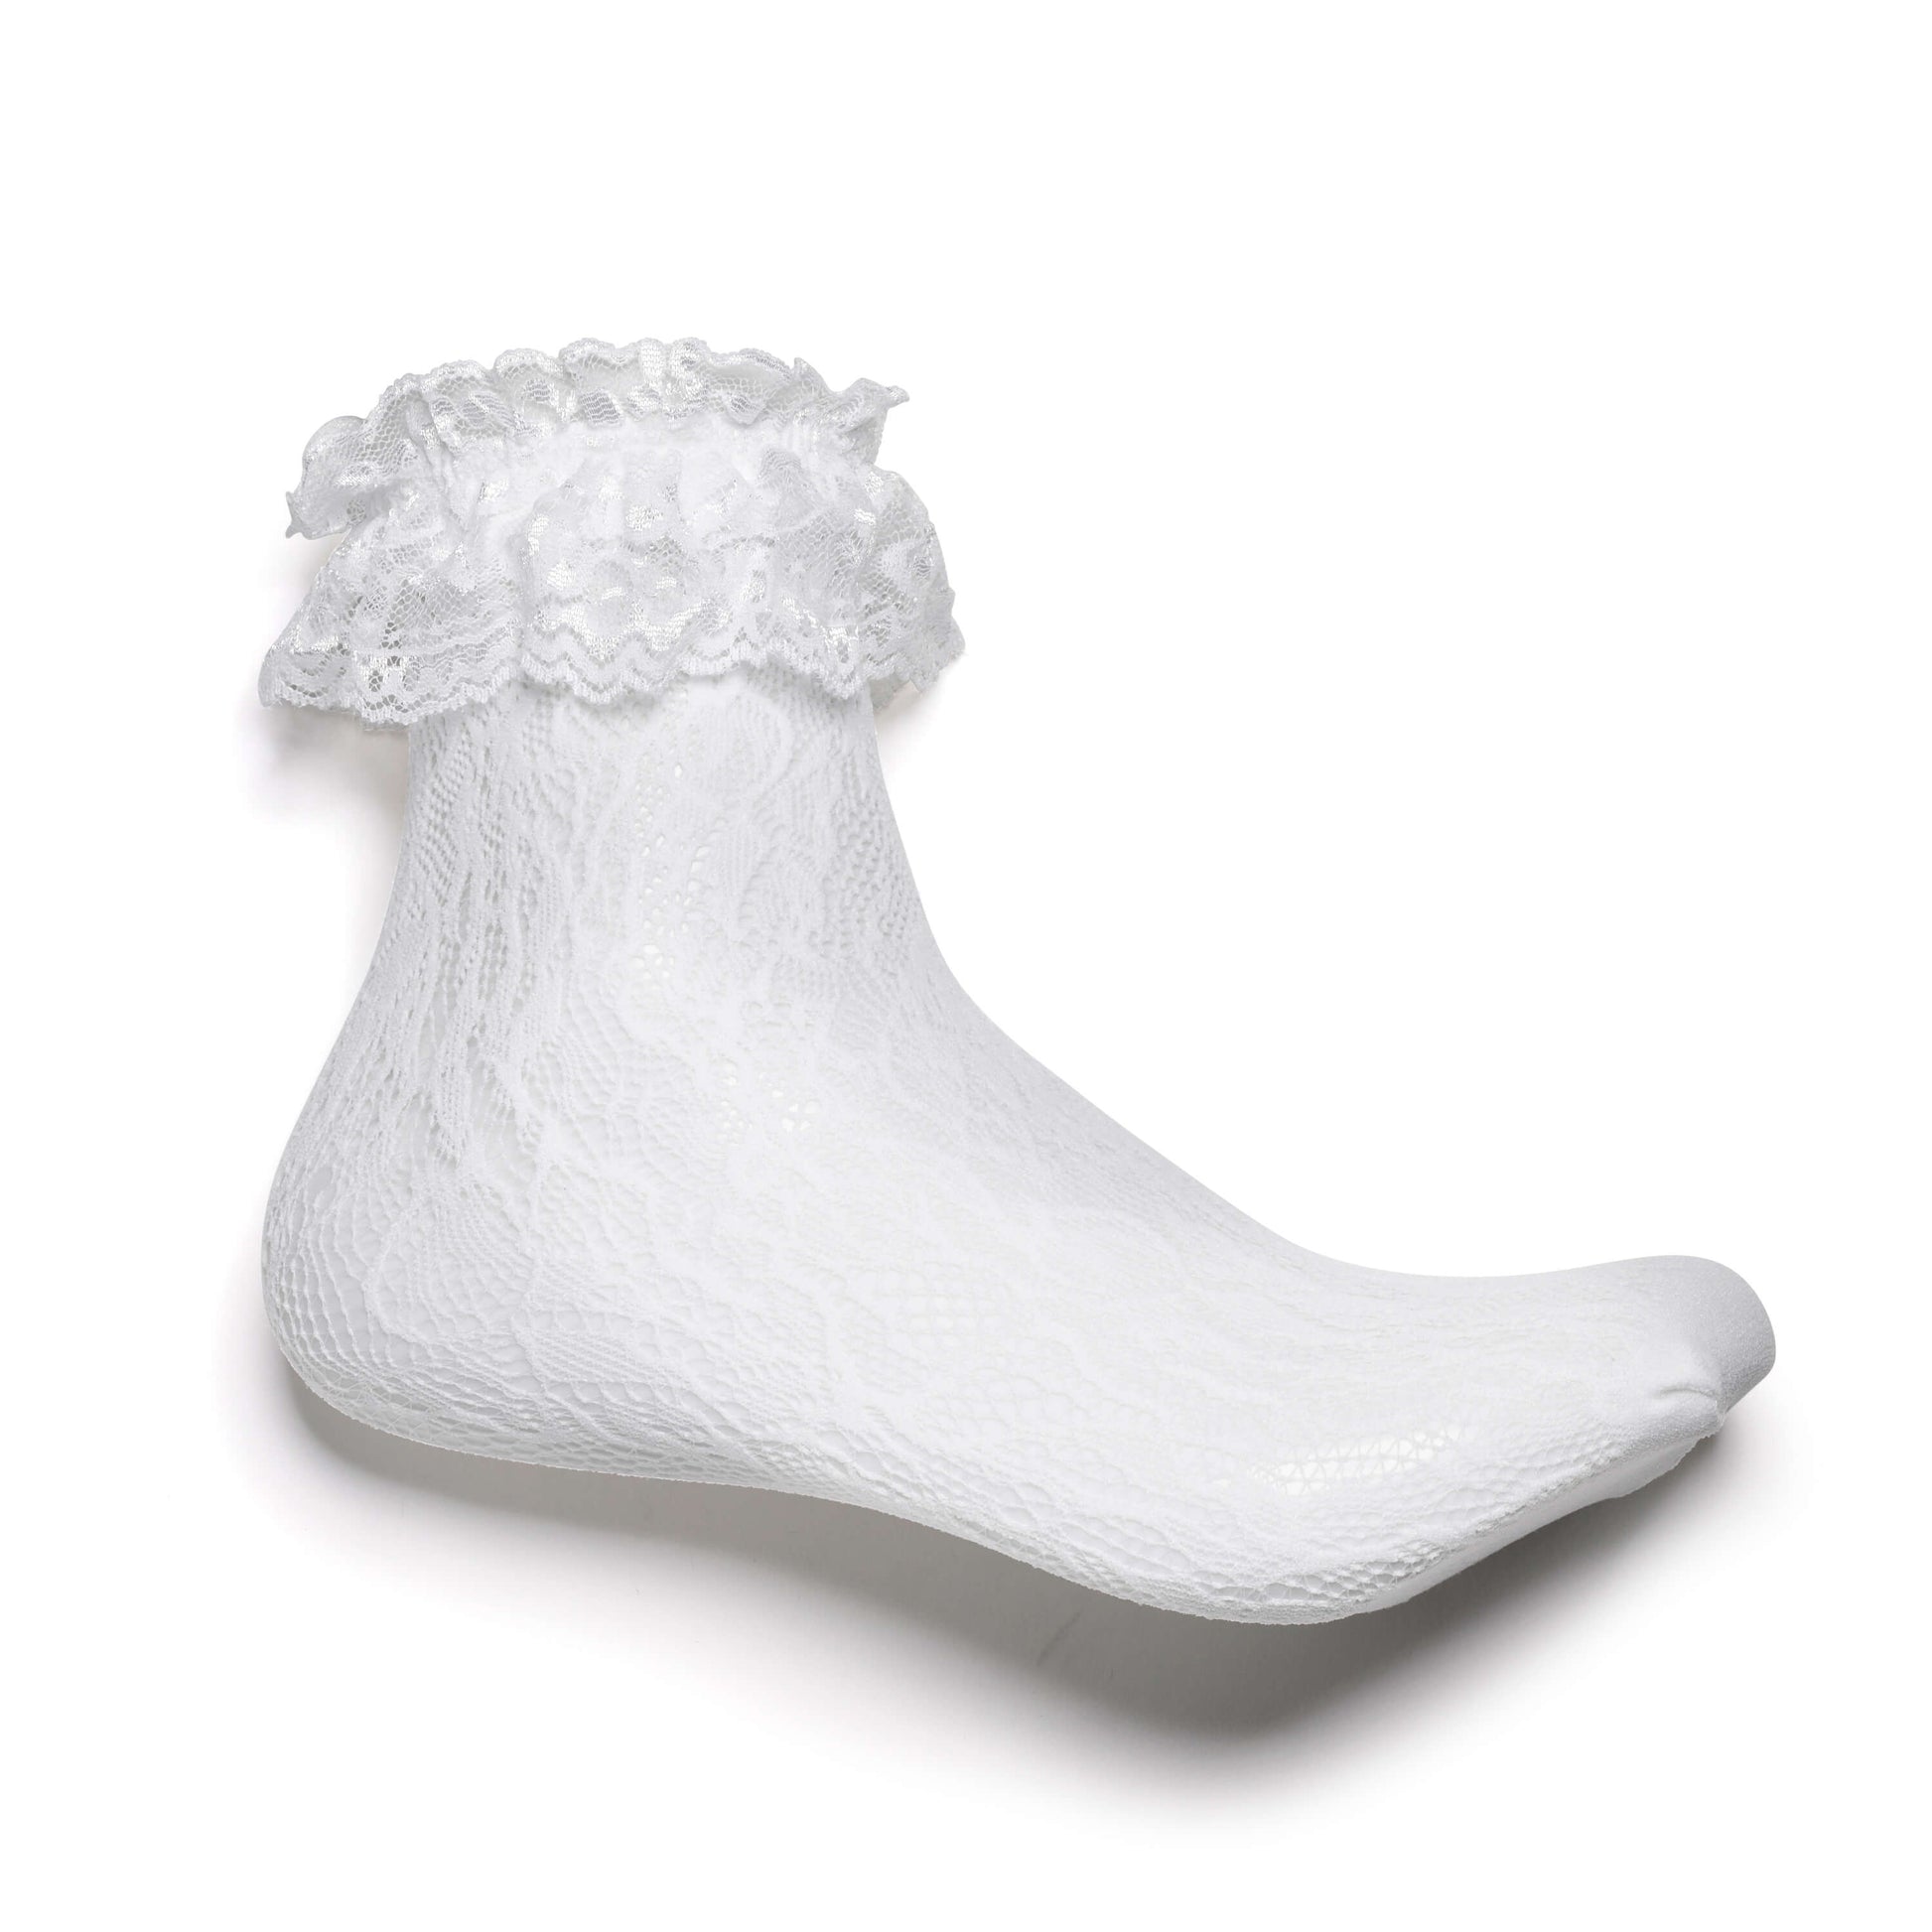 Heiress White Lace Ruffle Socks